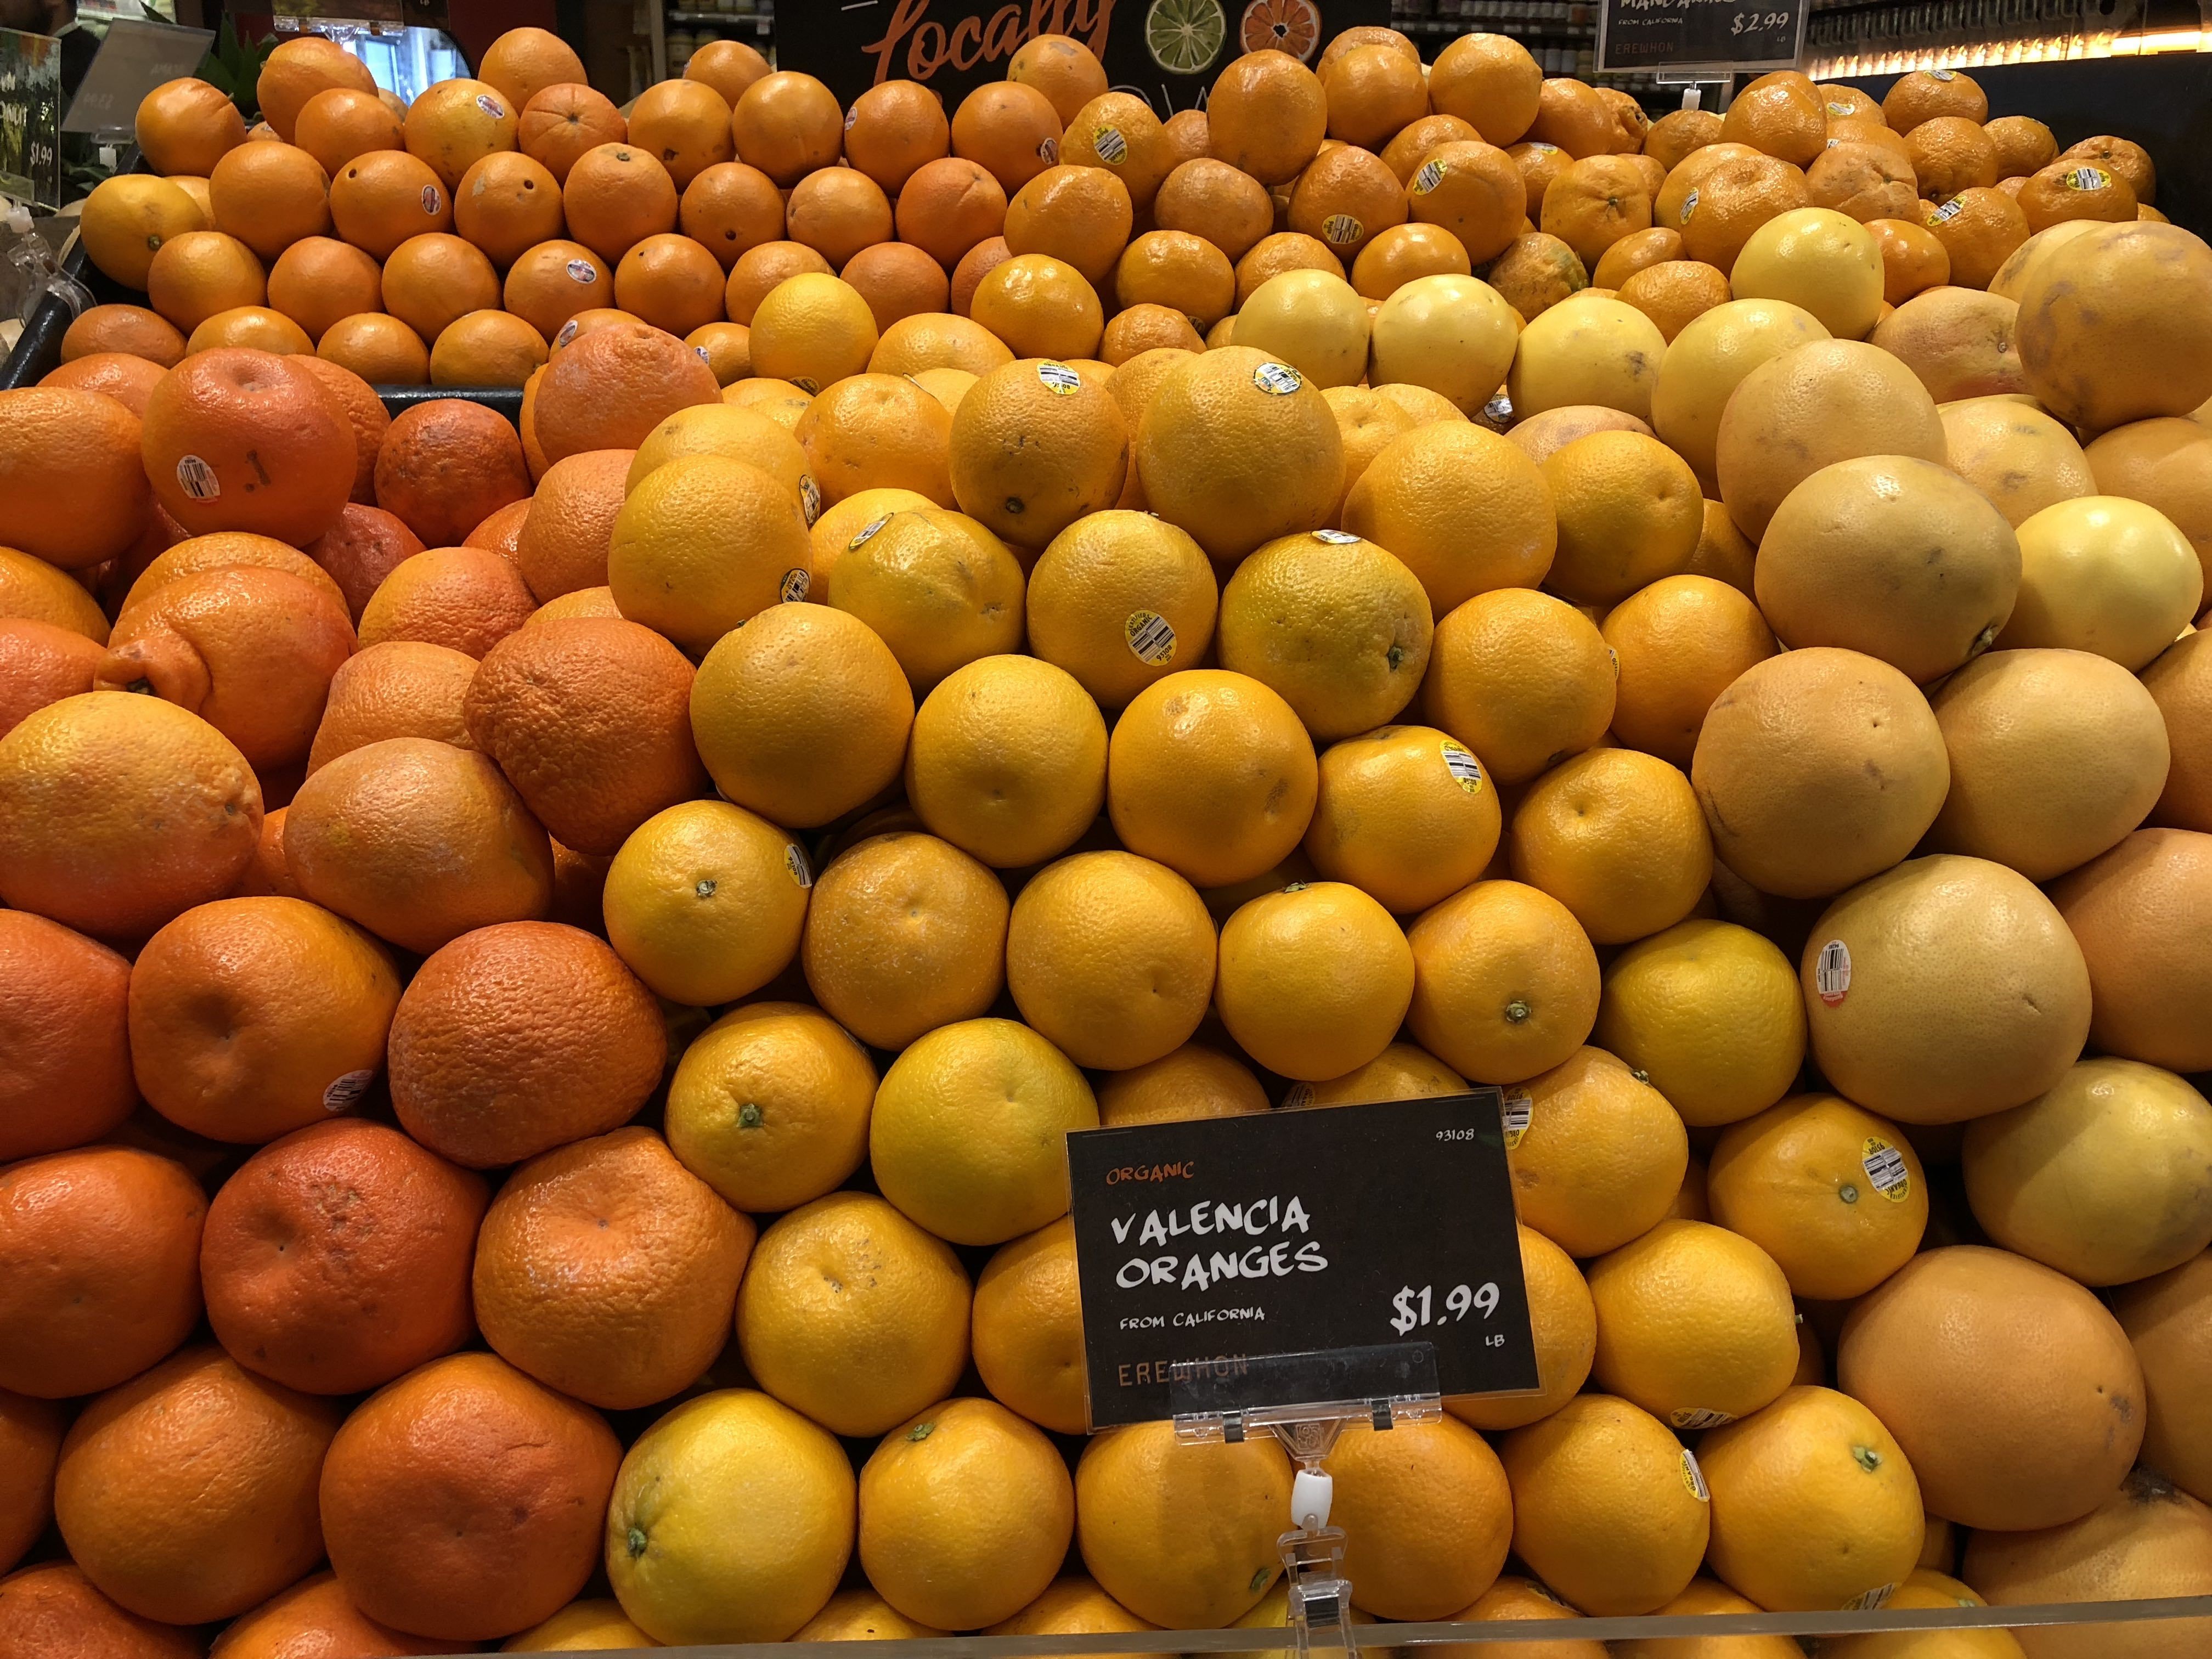 Citrus selection at erewhon